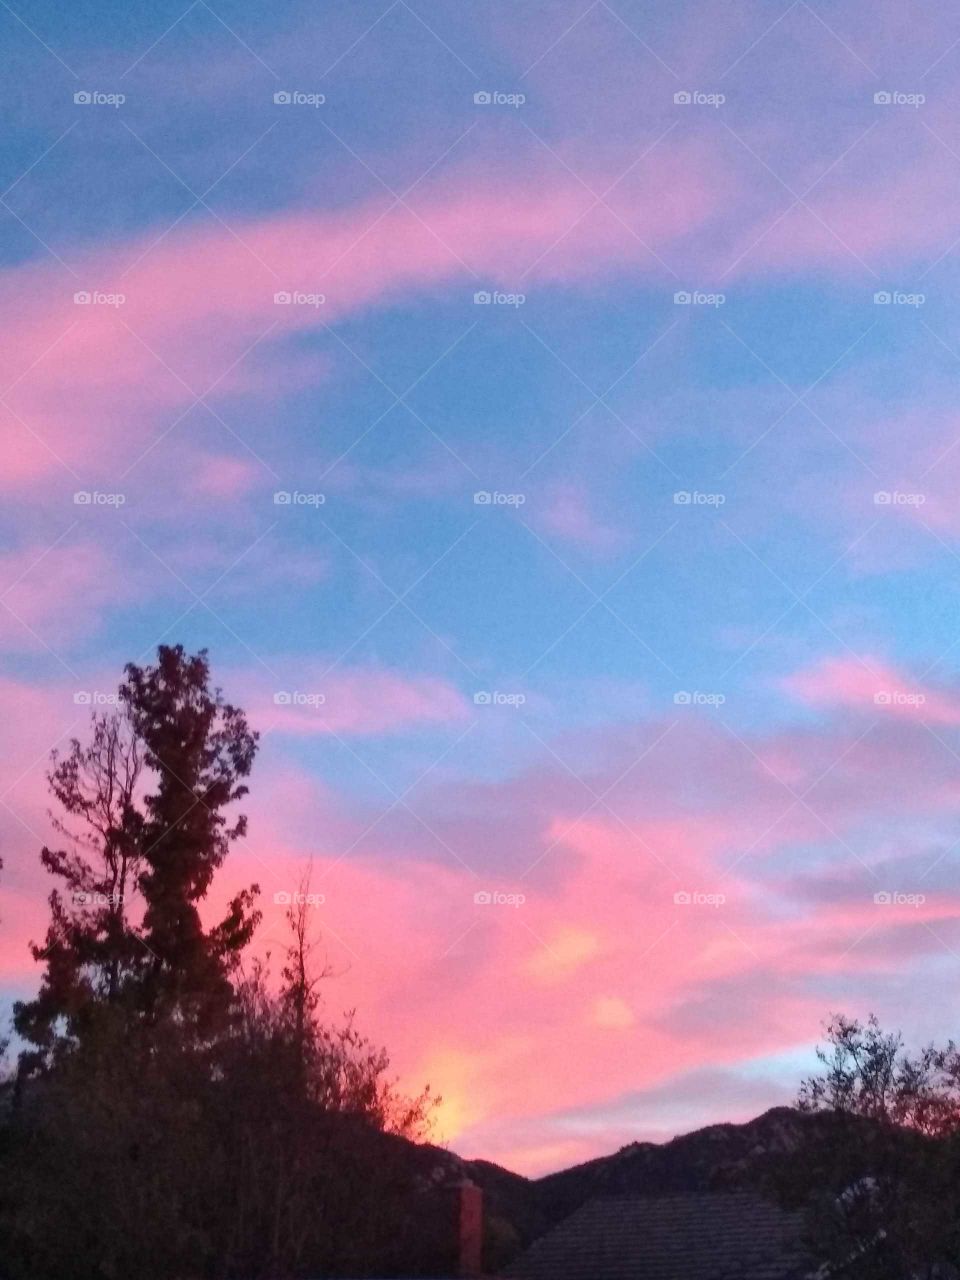 A beautiful California cotton candy evening sky.